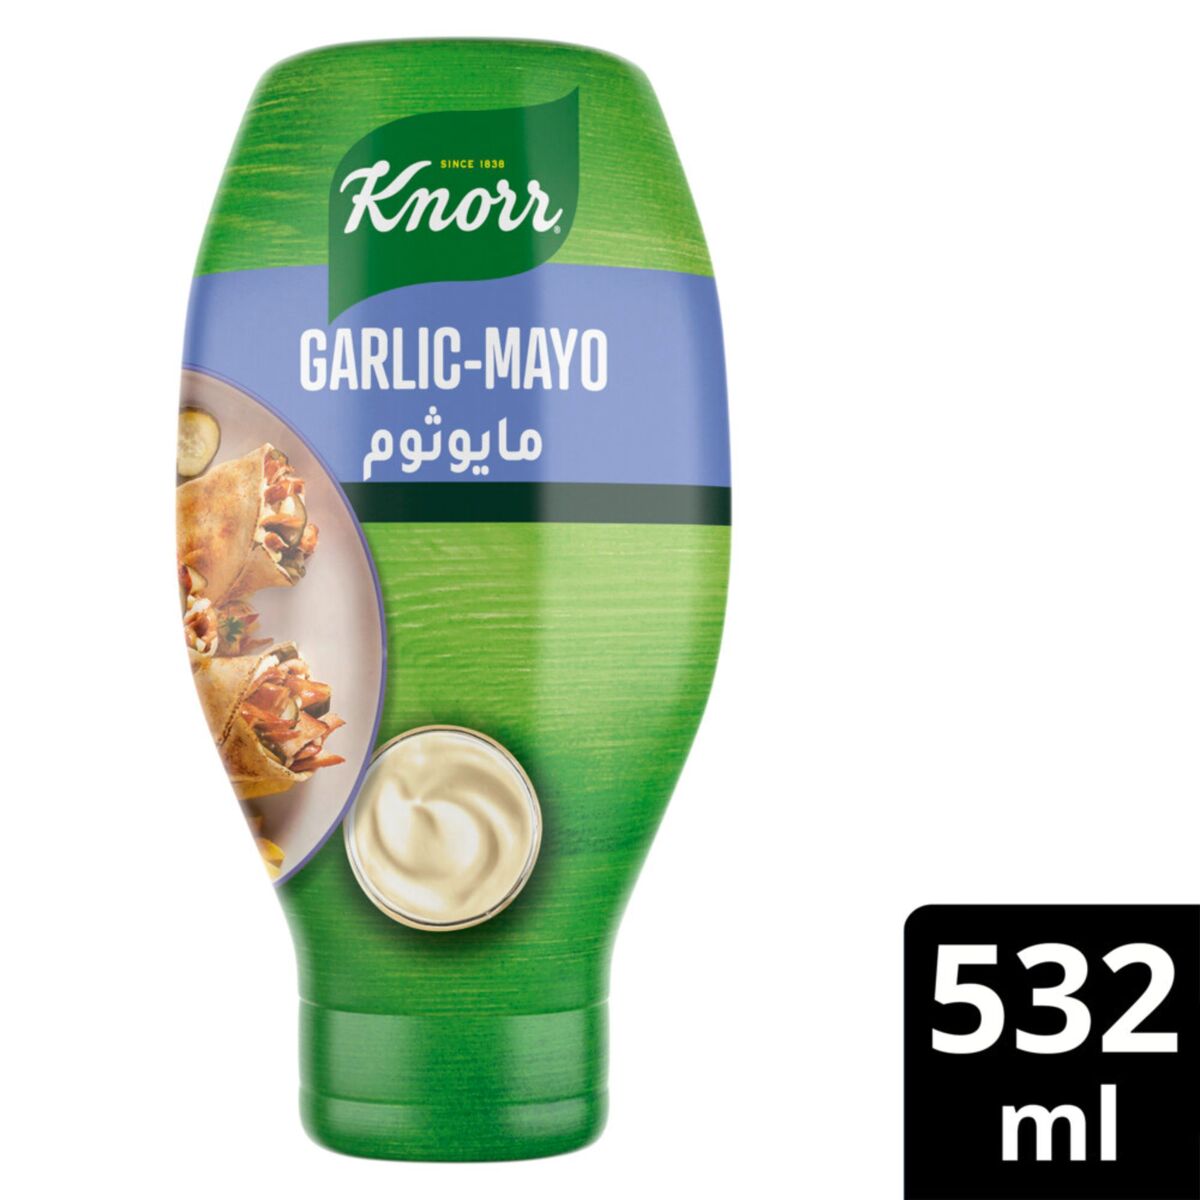 Knorr Mayo Garlic 532 ml